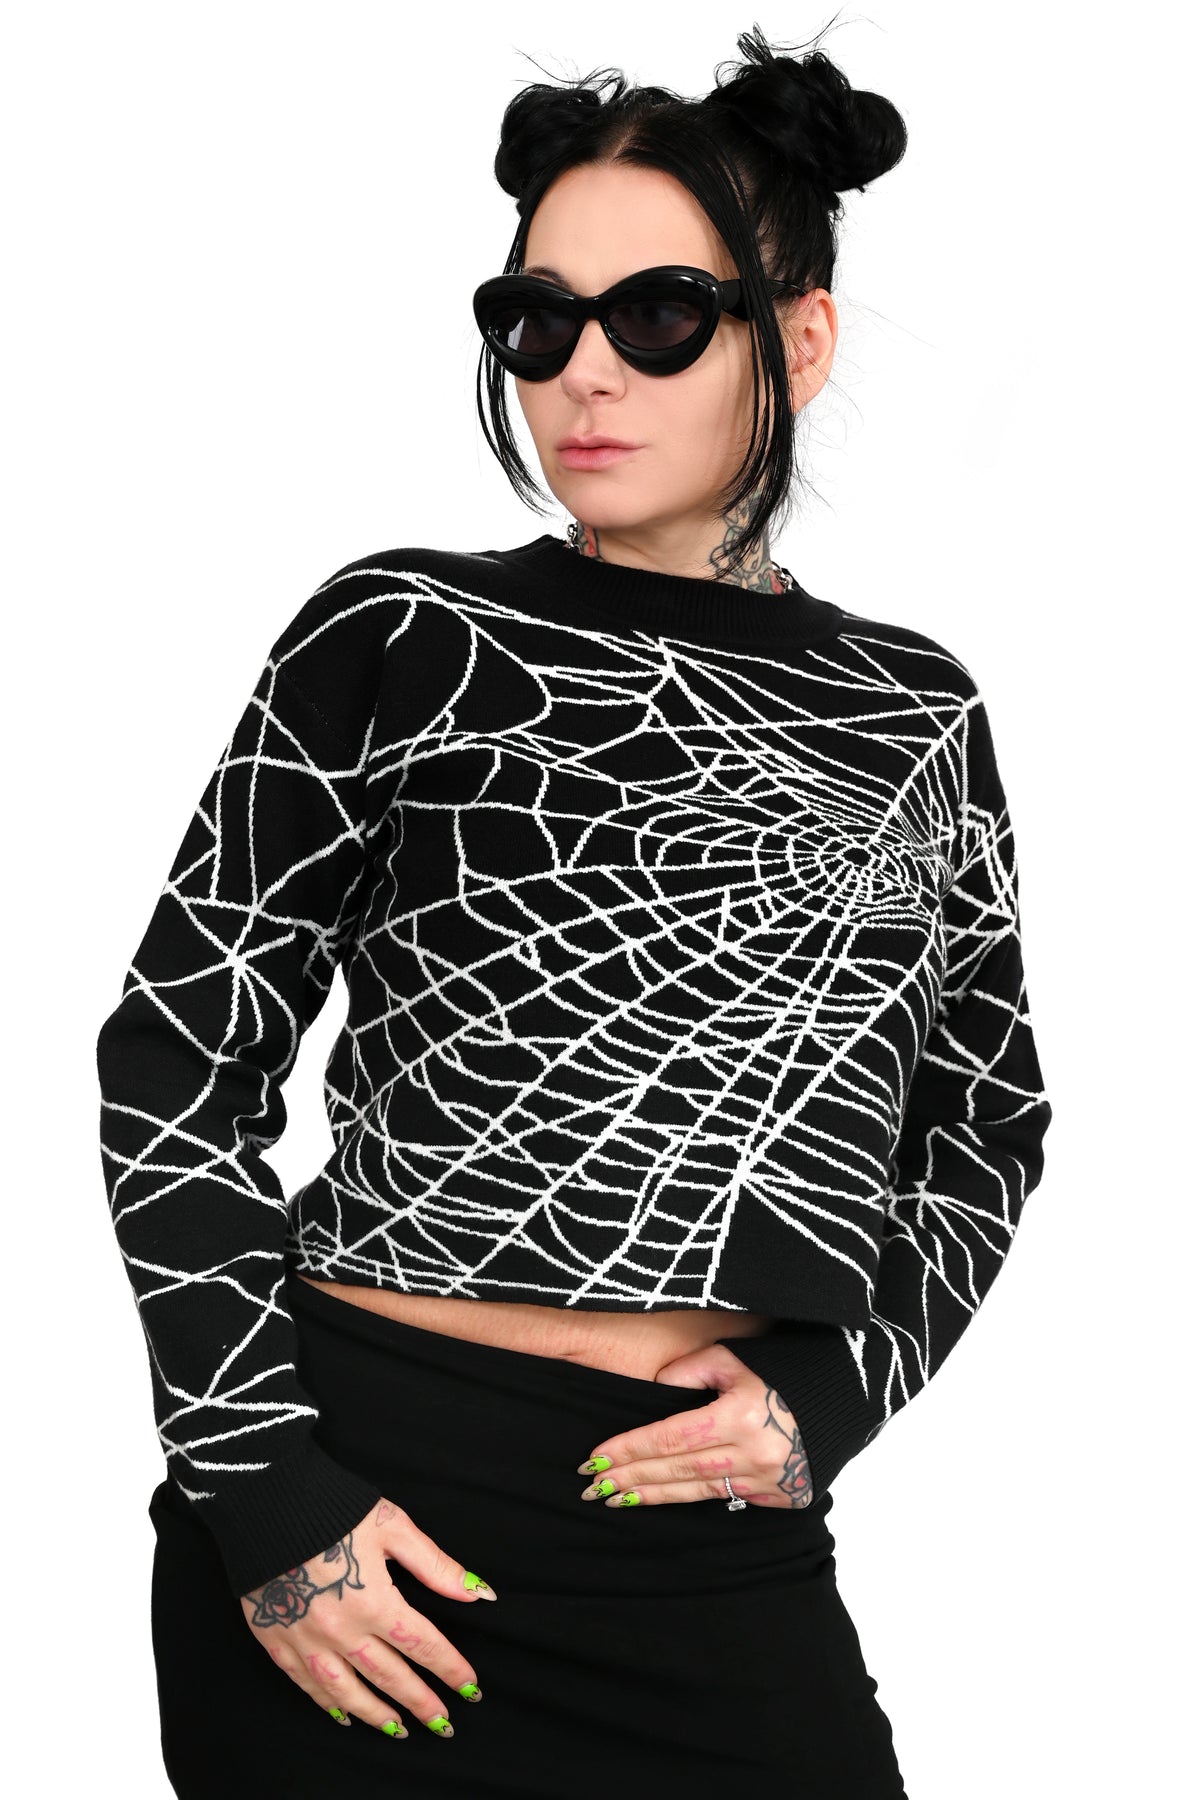 Cobweb Crop Sweater - 4XL left!